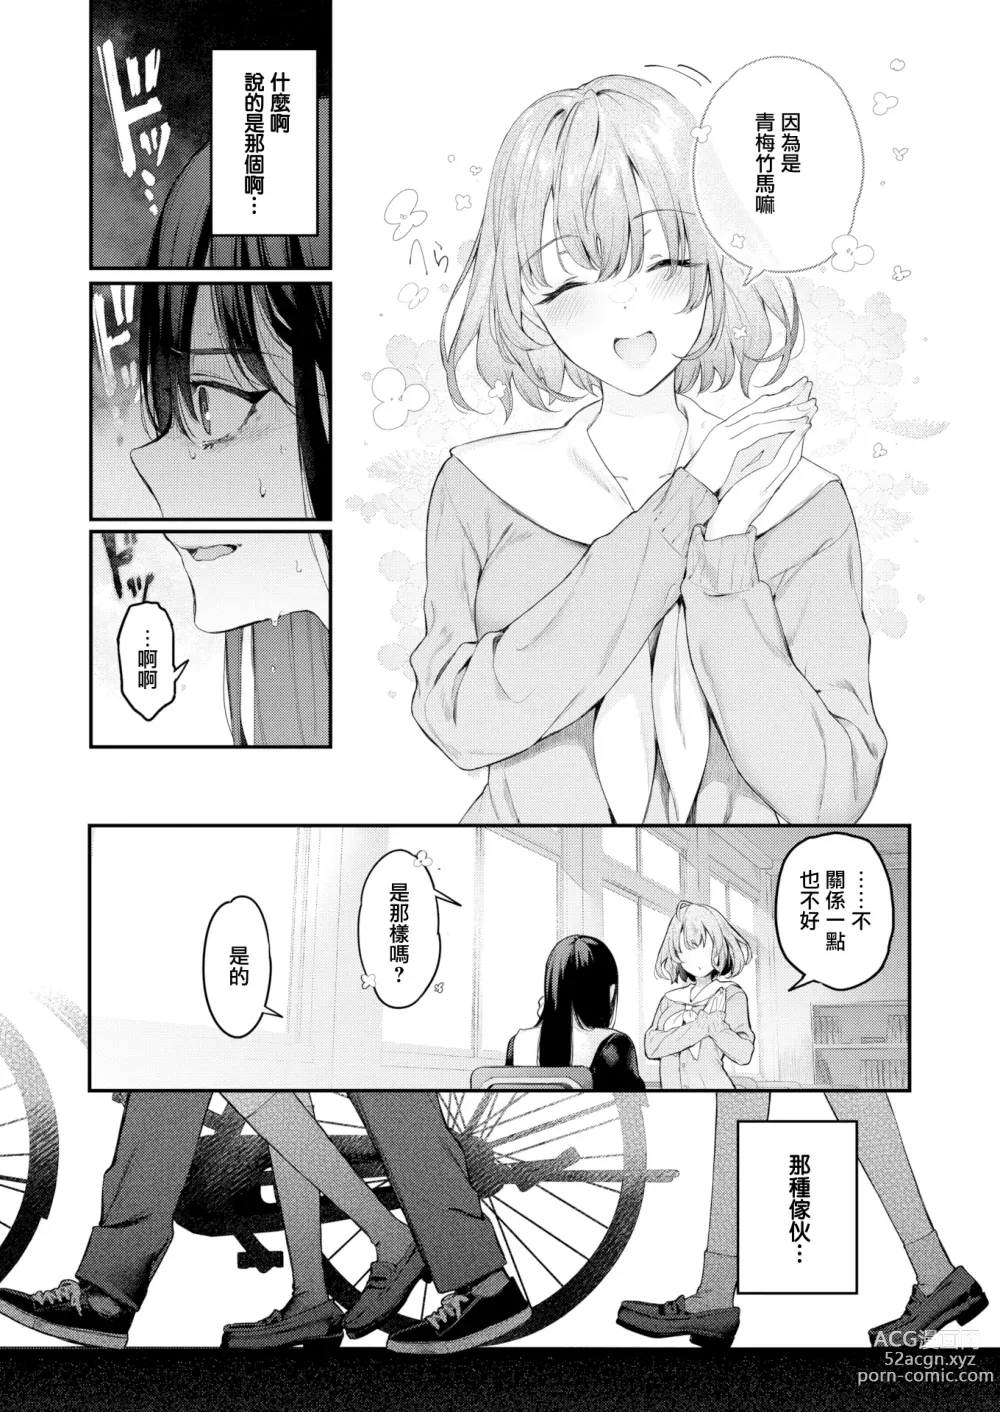 Page 5 of manga Watashi no Kirai na Hito (uncensored)